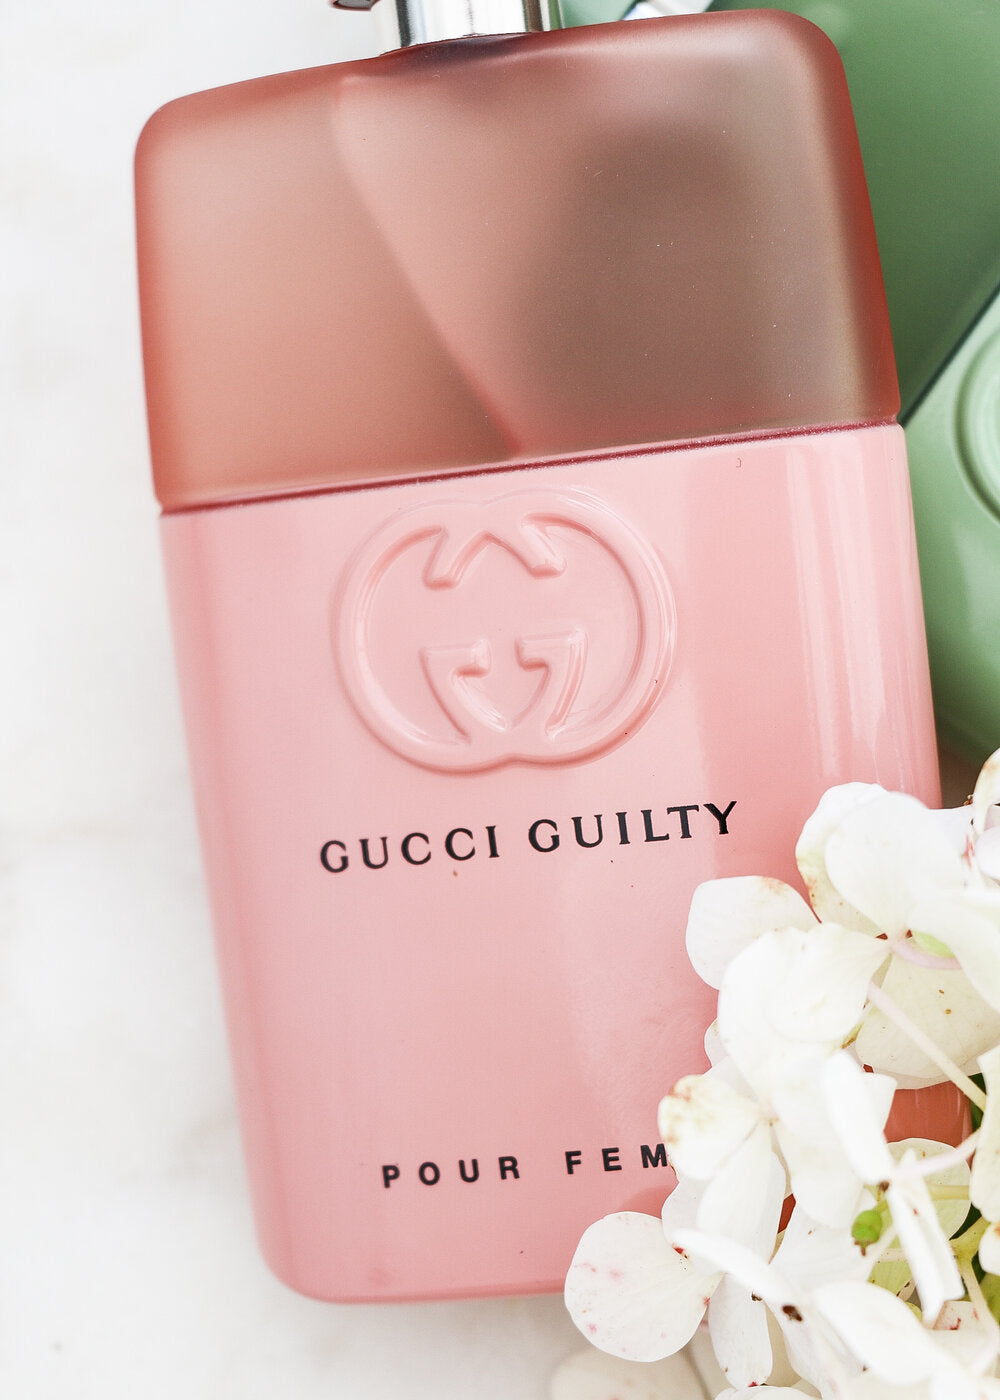 Gucci Guilty Love Edition EDP (L) | Ramfa Beauty